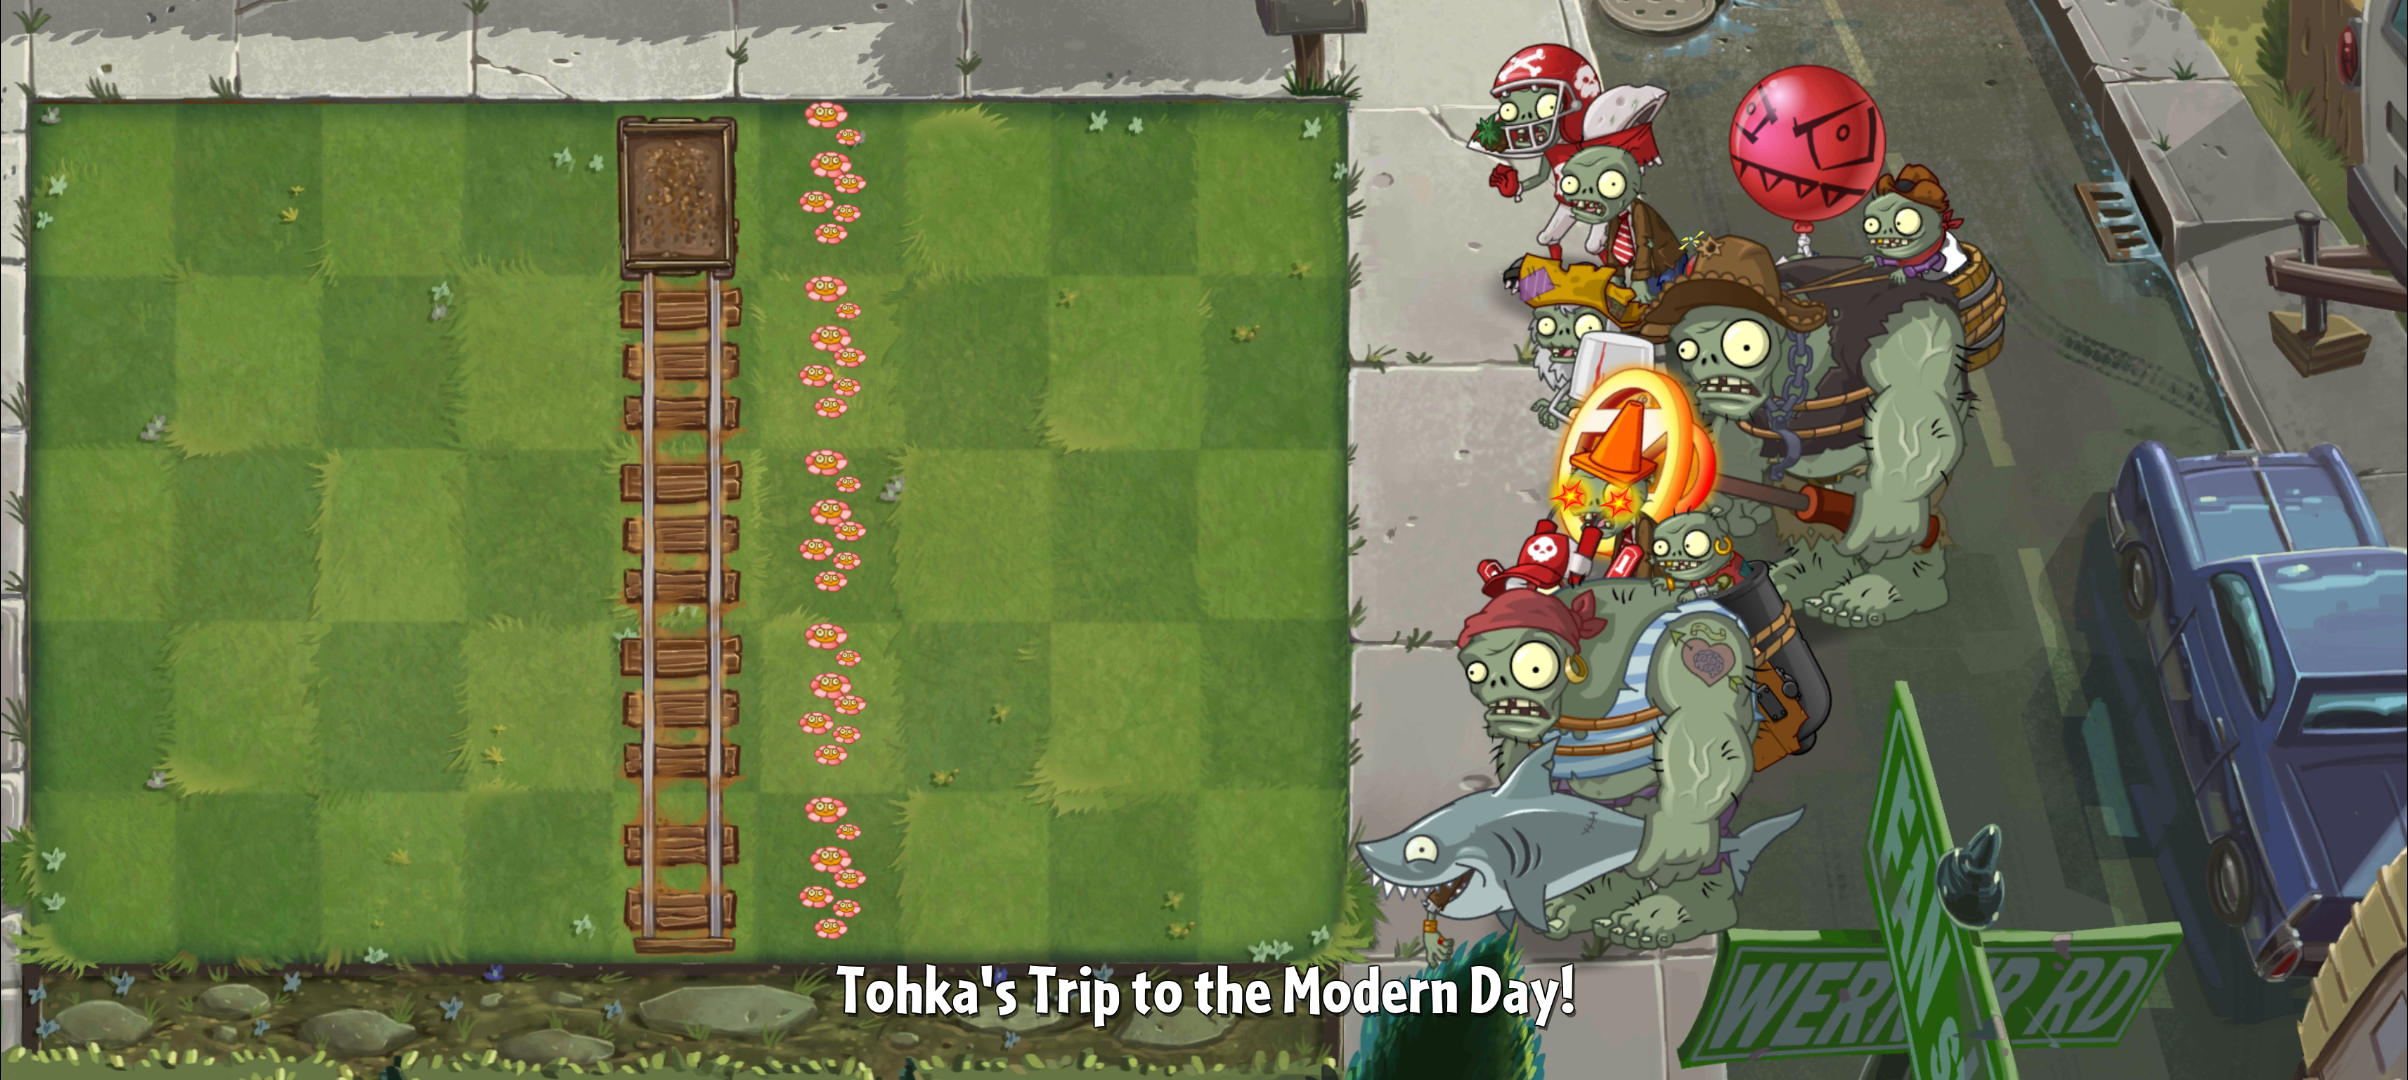 Modern Day - Day 30, Plants vs. Zombies Wiki